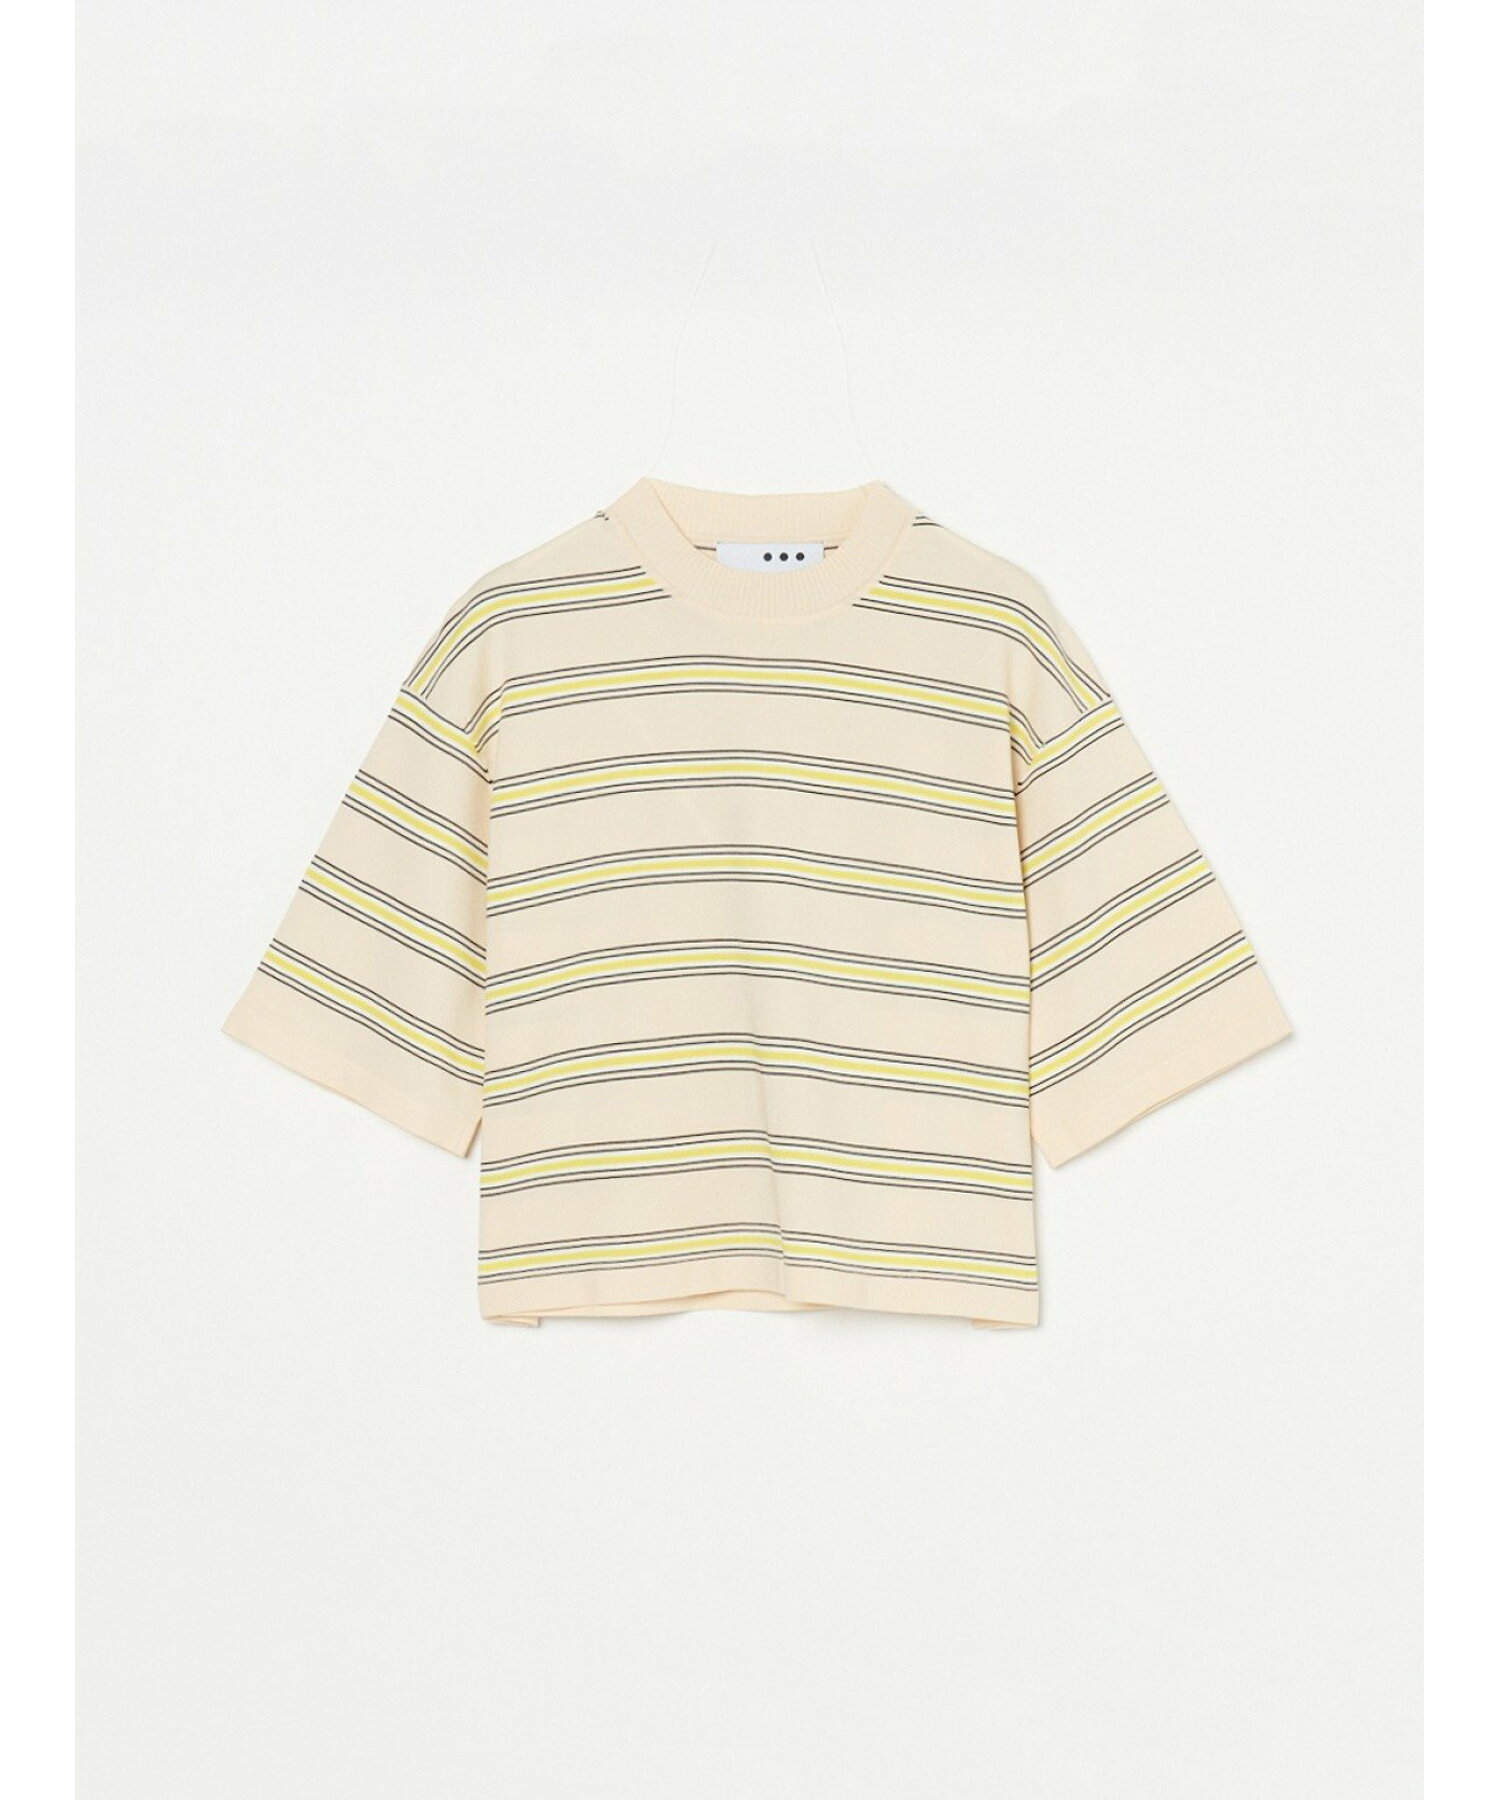 Sleek sweater s/s knitted tshirt